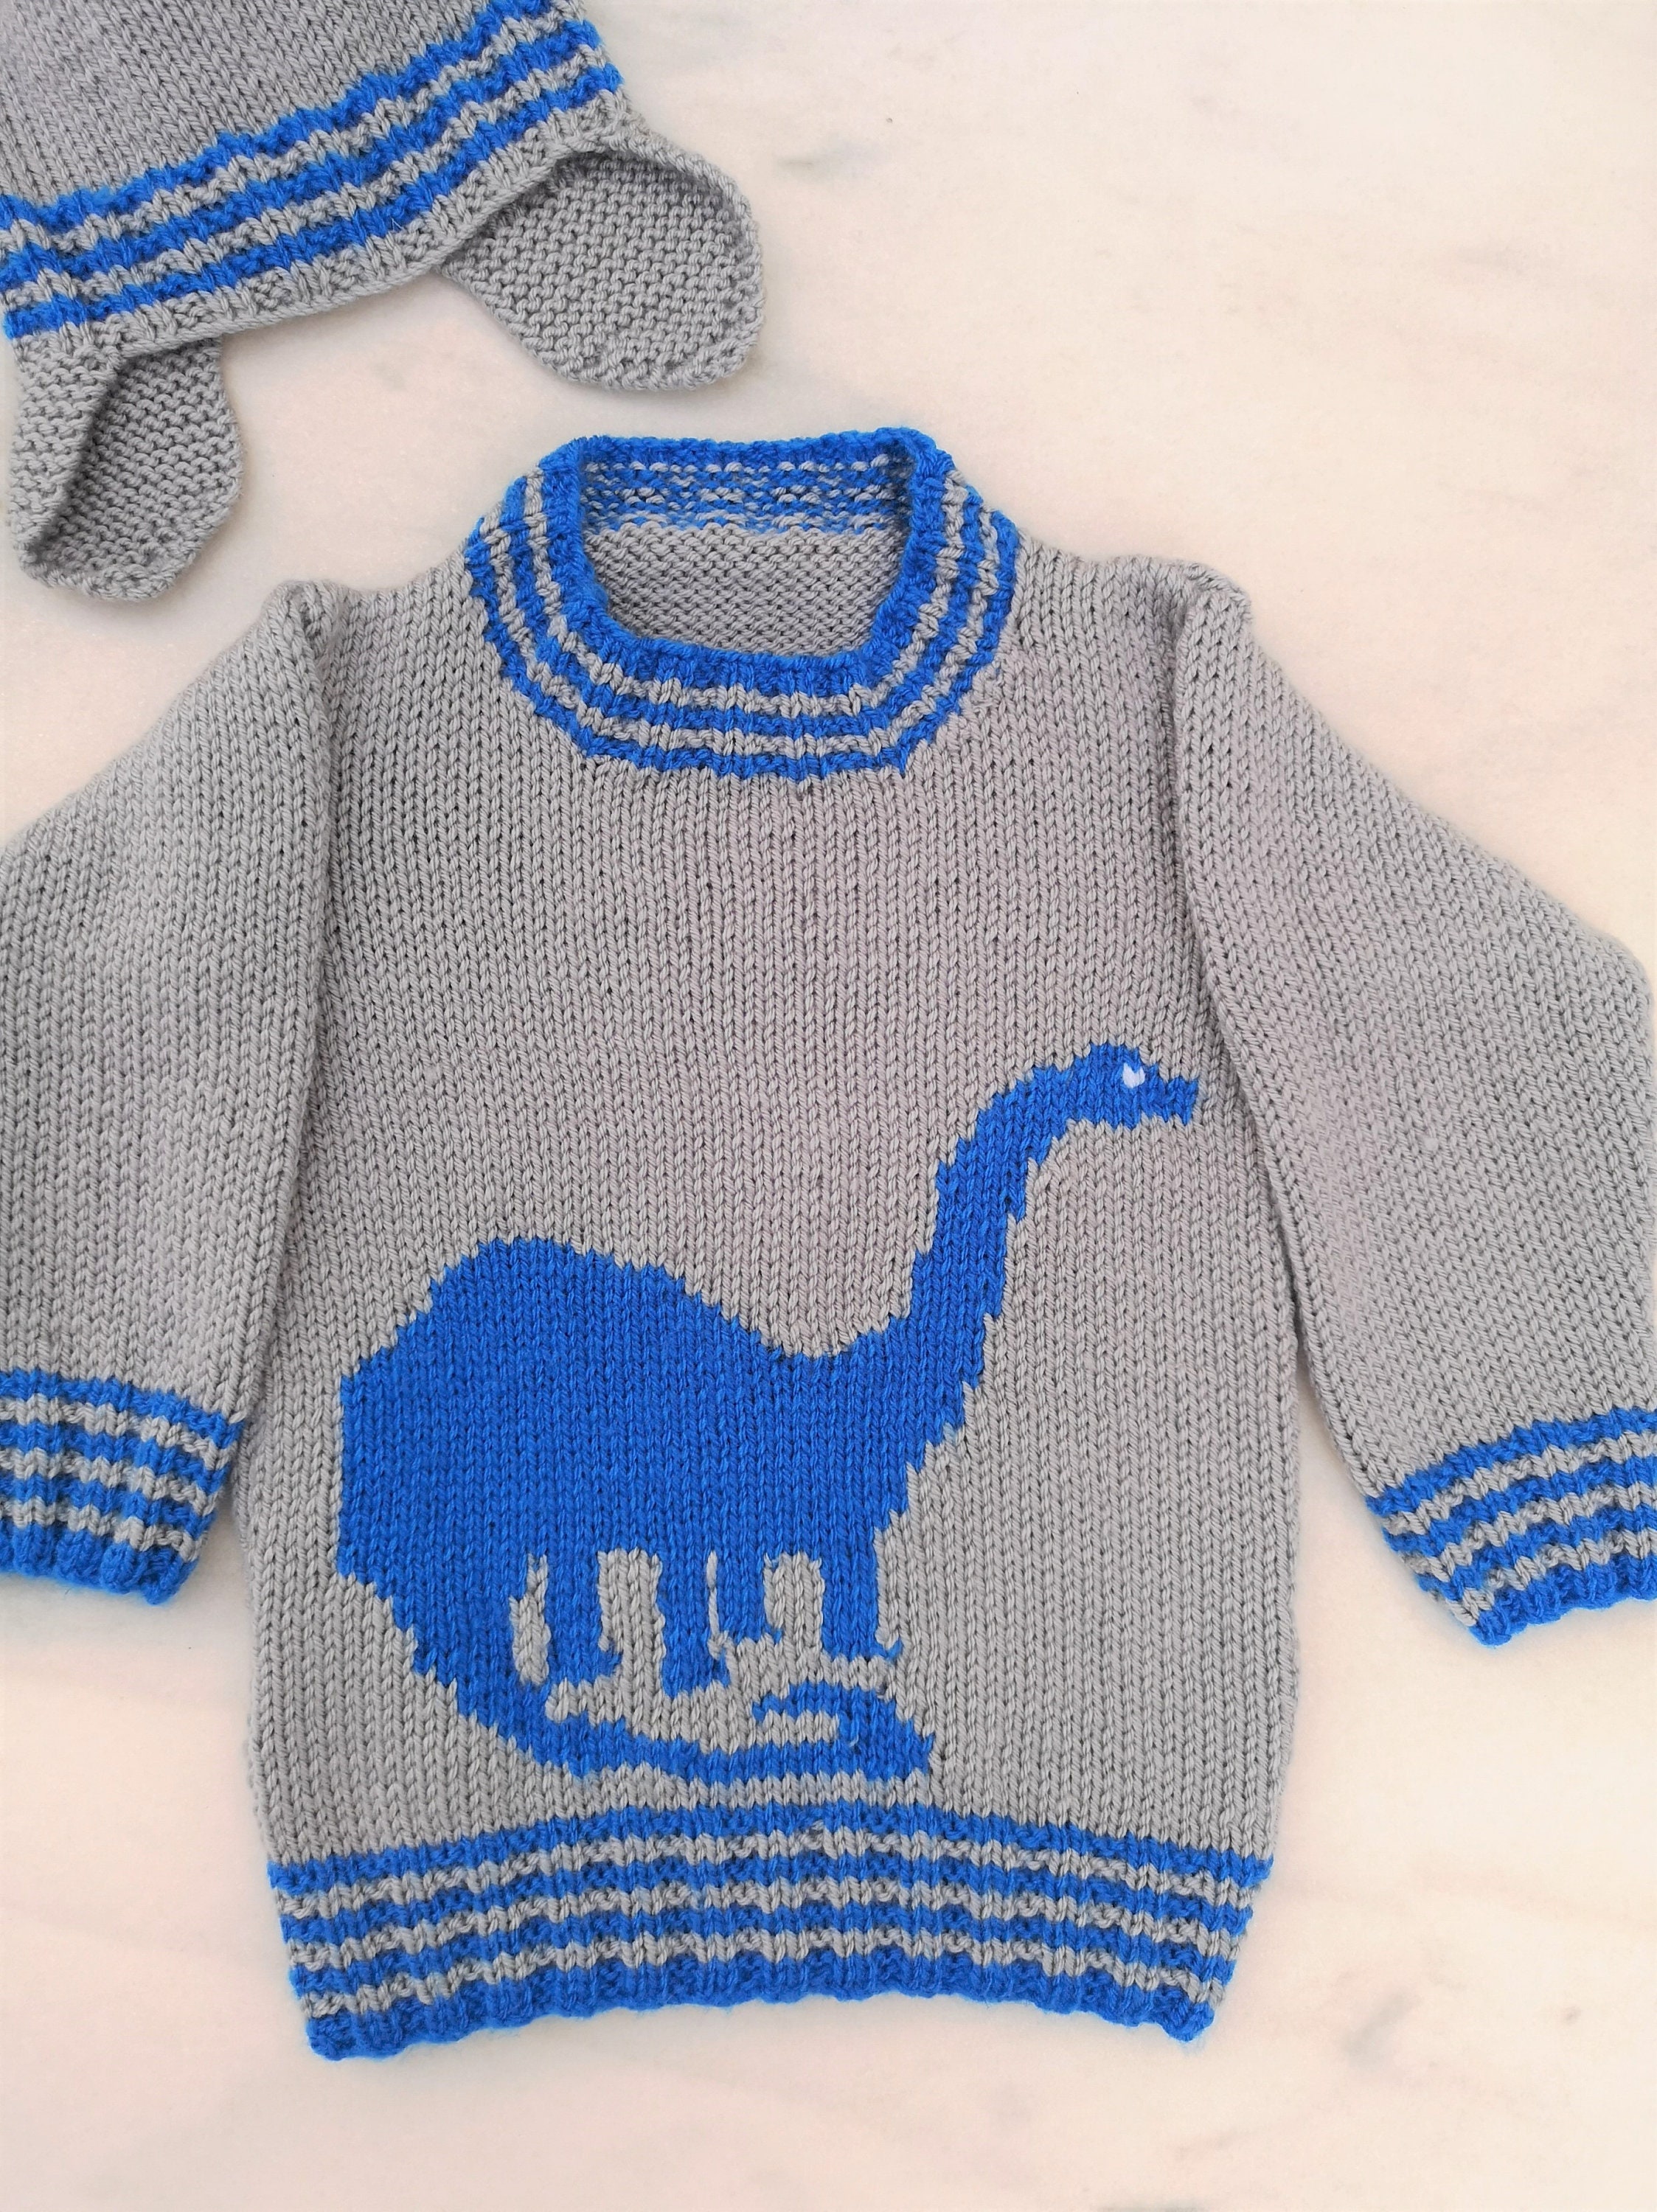 Knitting Pattern for Dinosaur Child's Sweater and Hat Brontosaurus